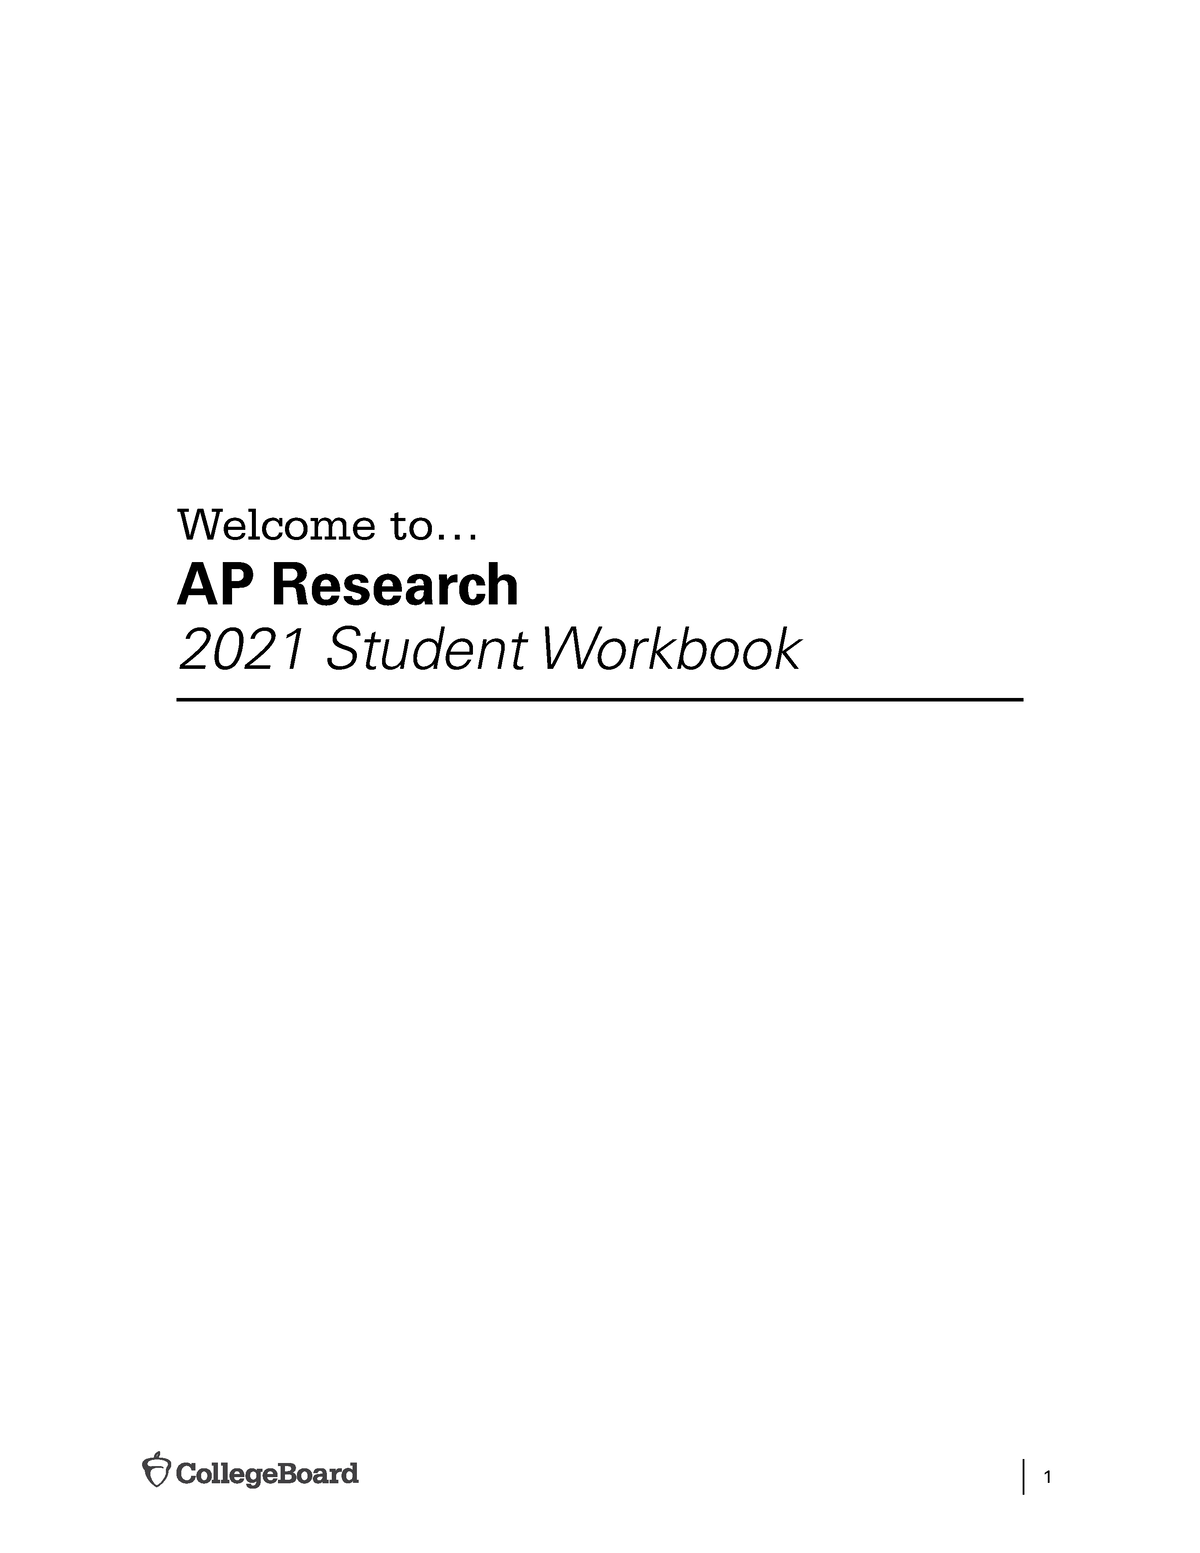 ap research student workbook 2021